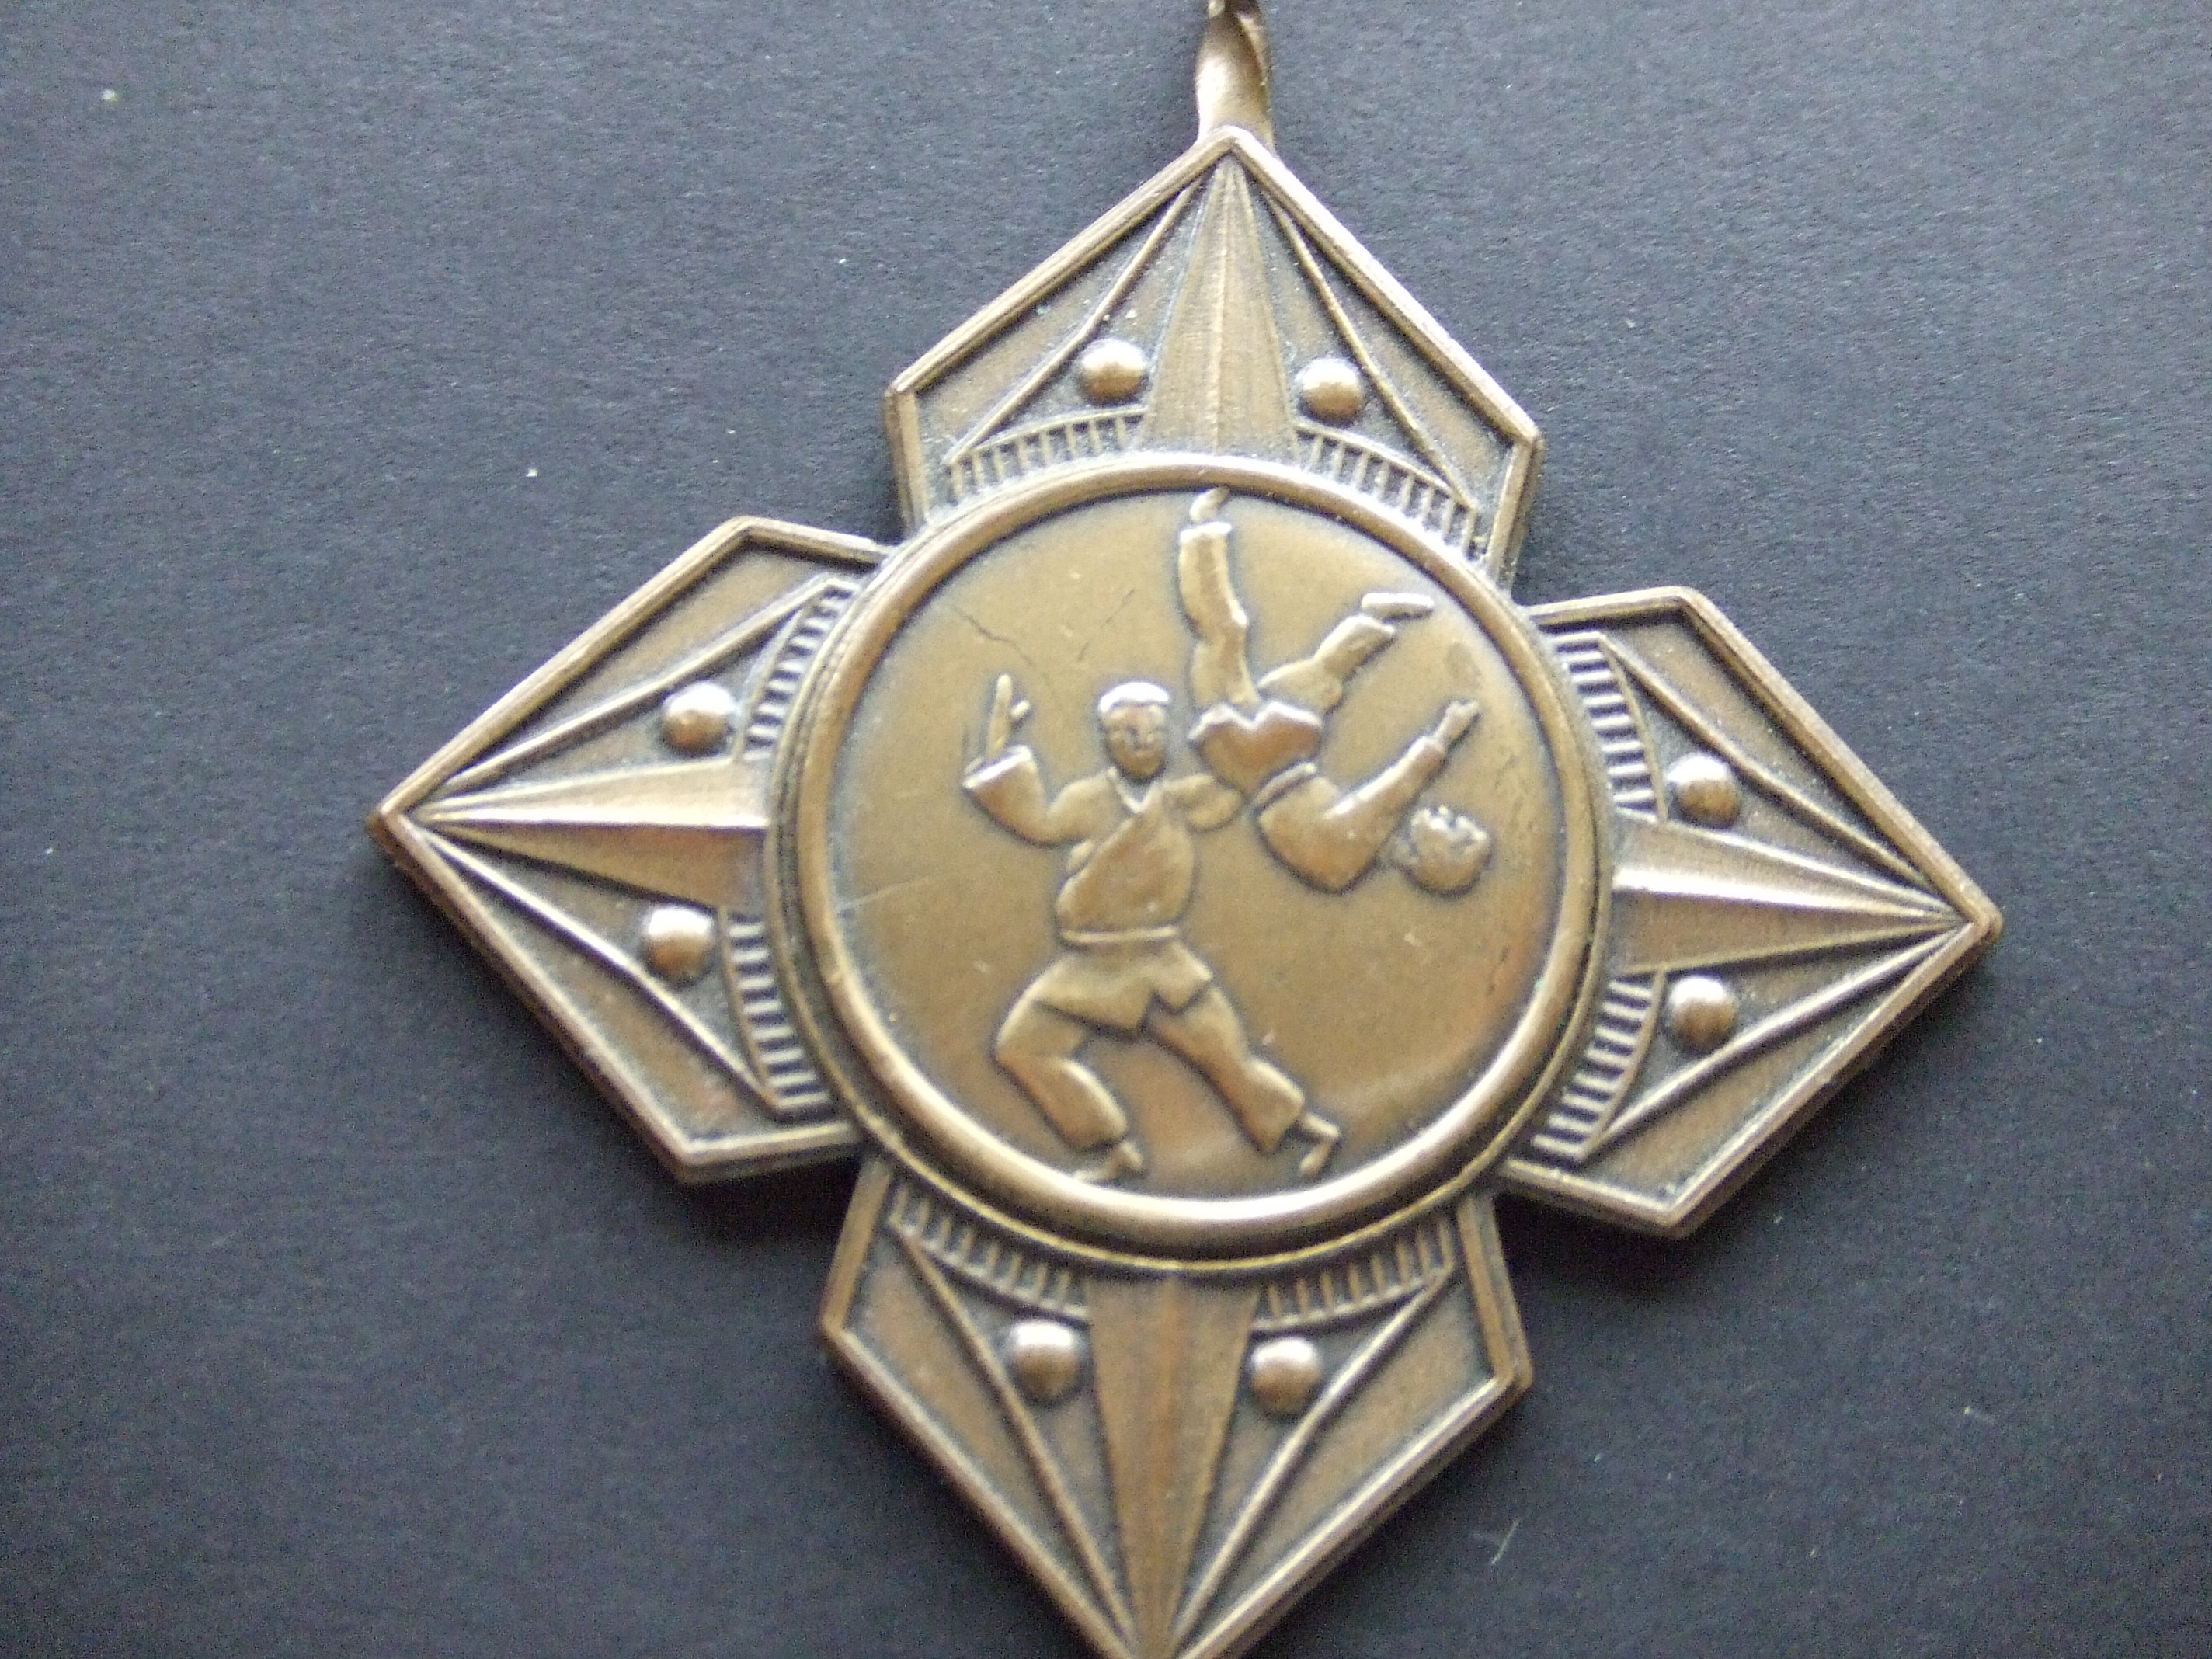 Jc Uke- M judo vechtsport kerst 1974